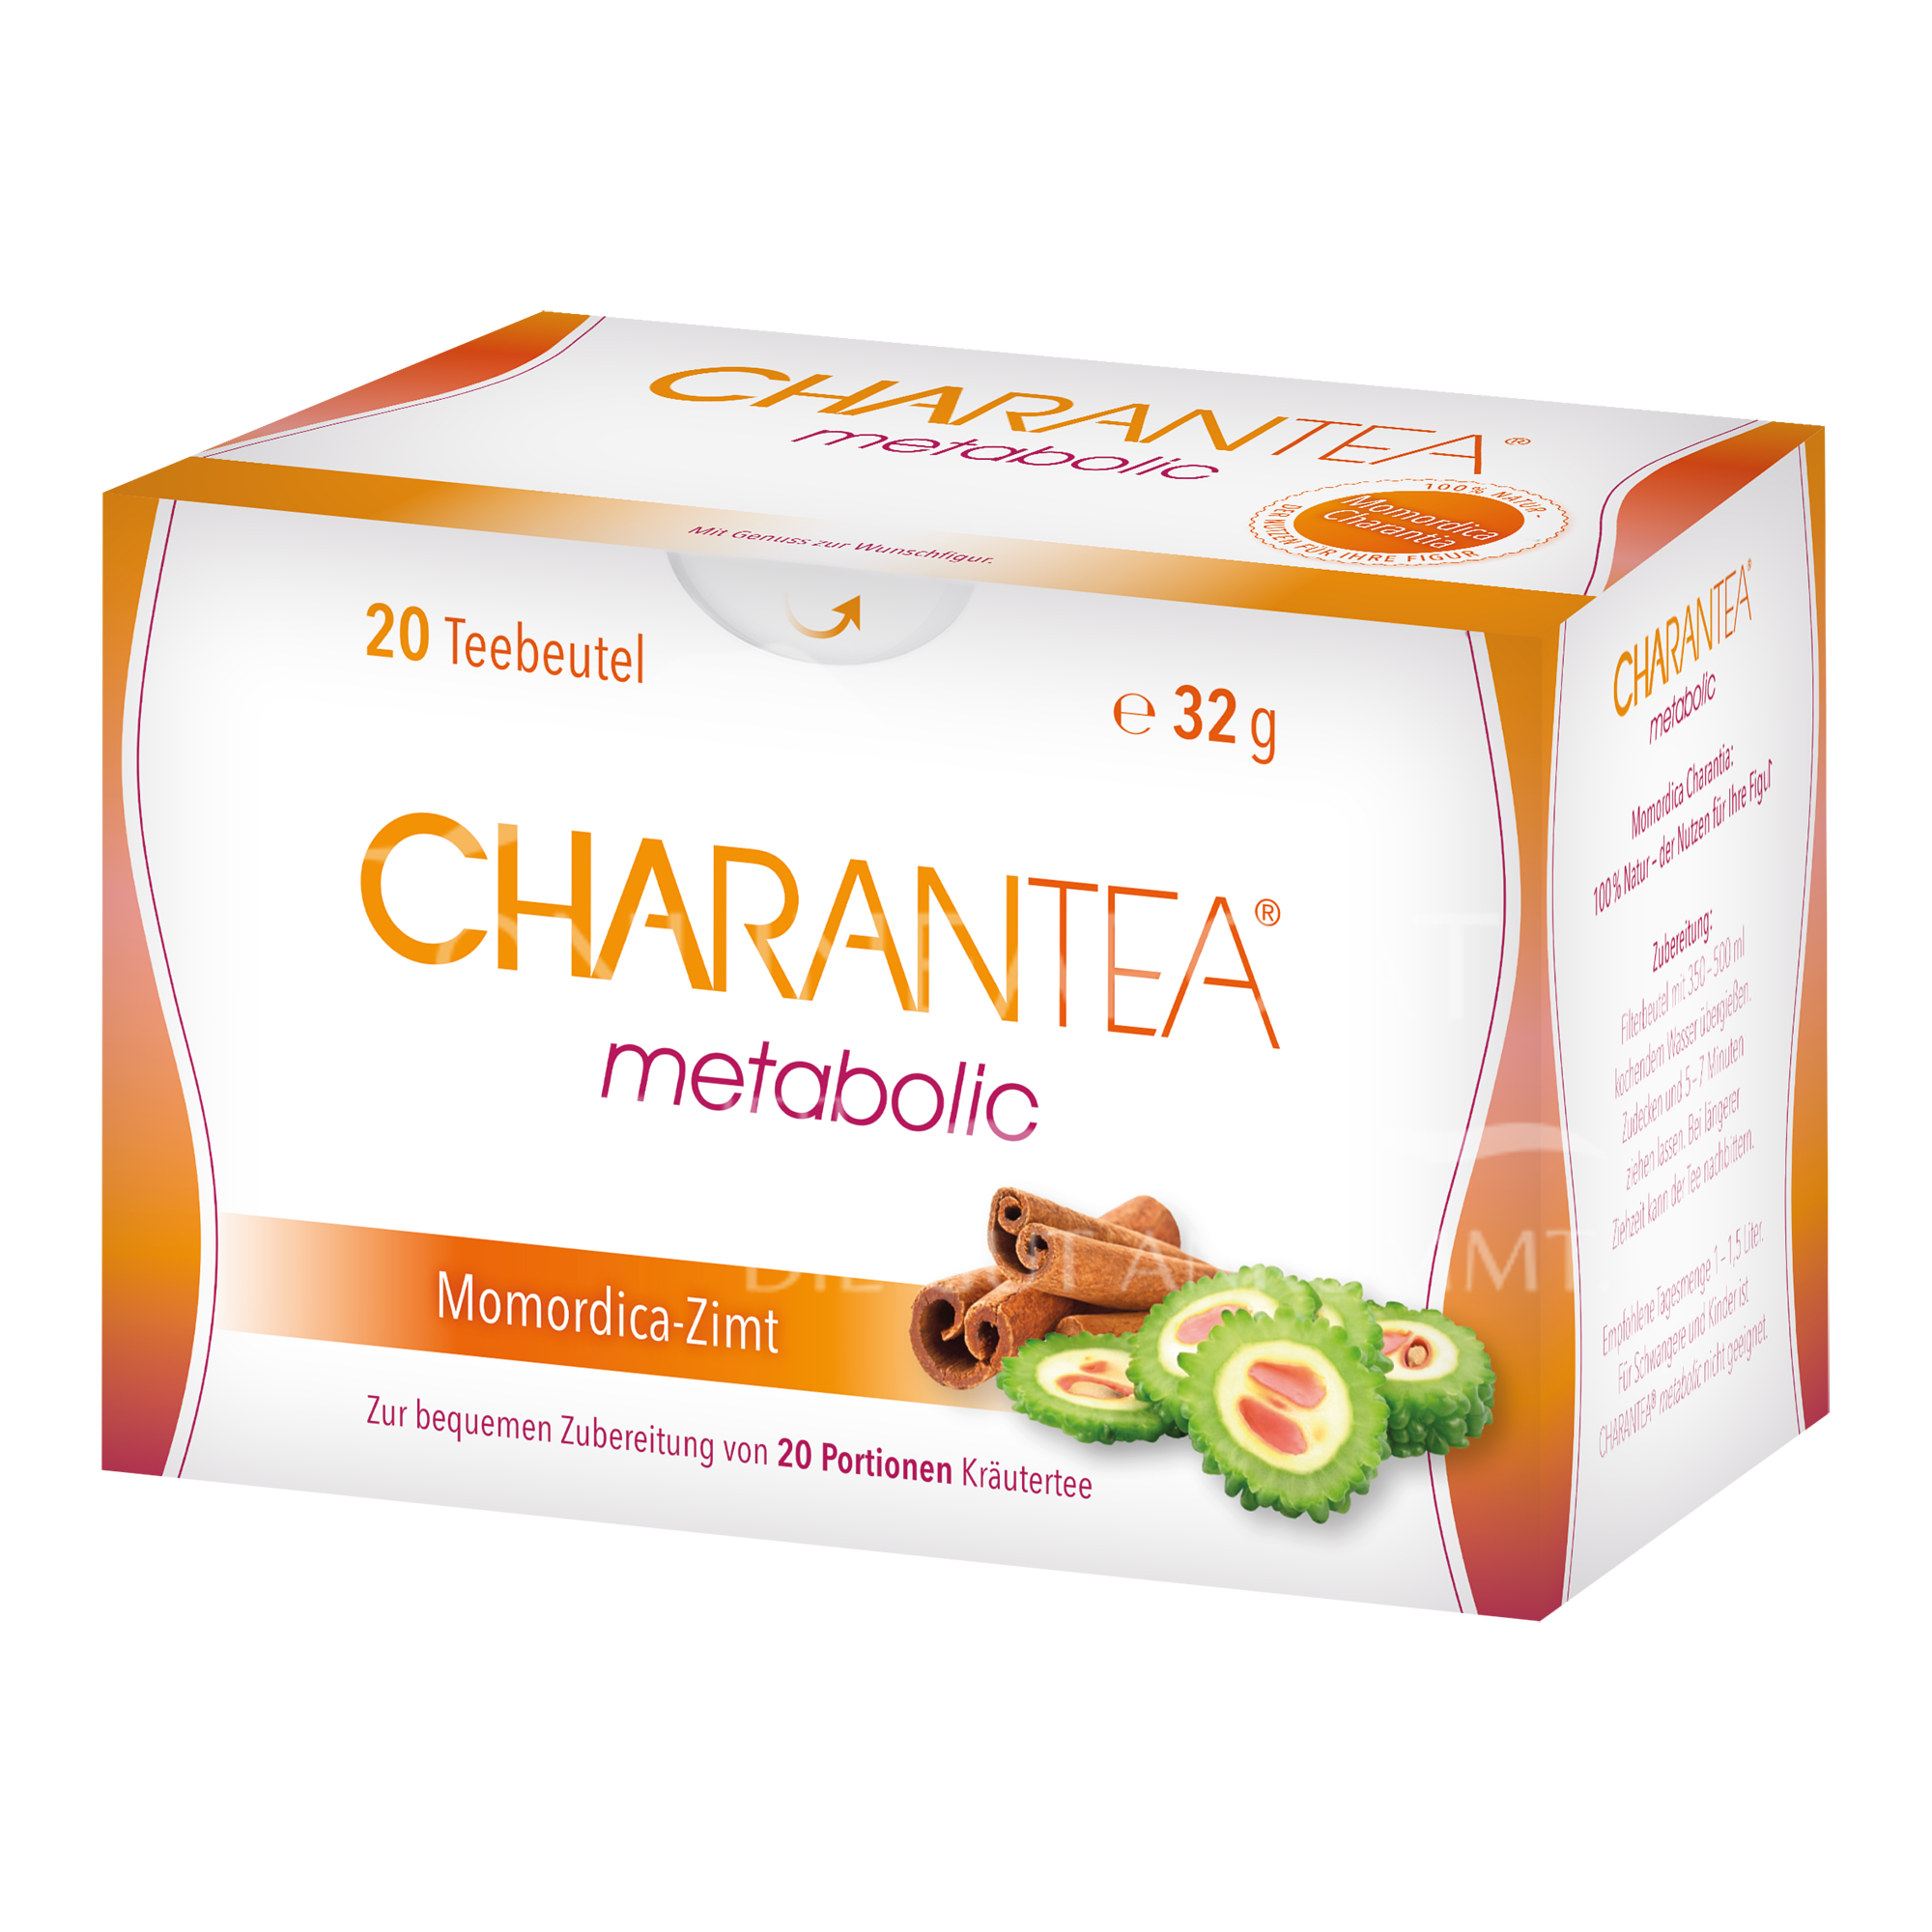 CHARANTEA® metabolic Mormodica-Zimt